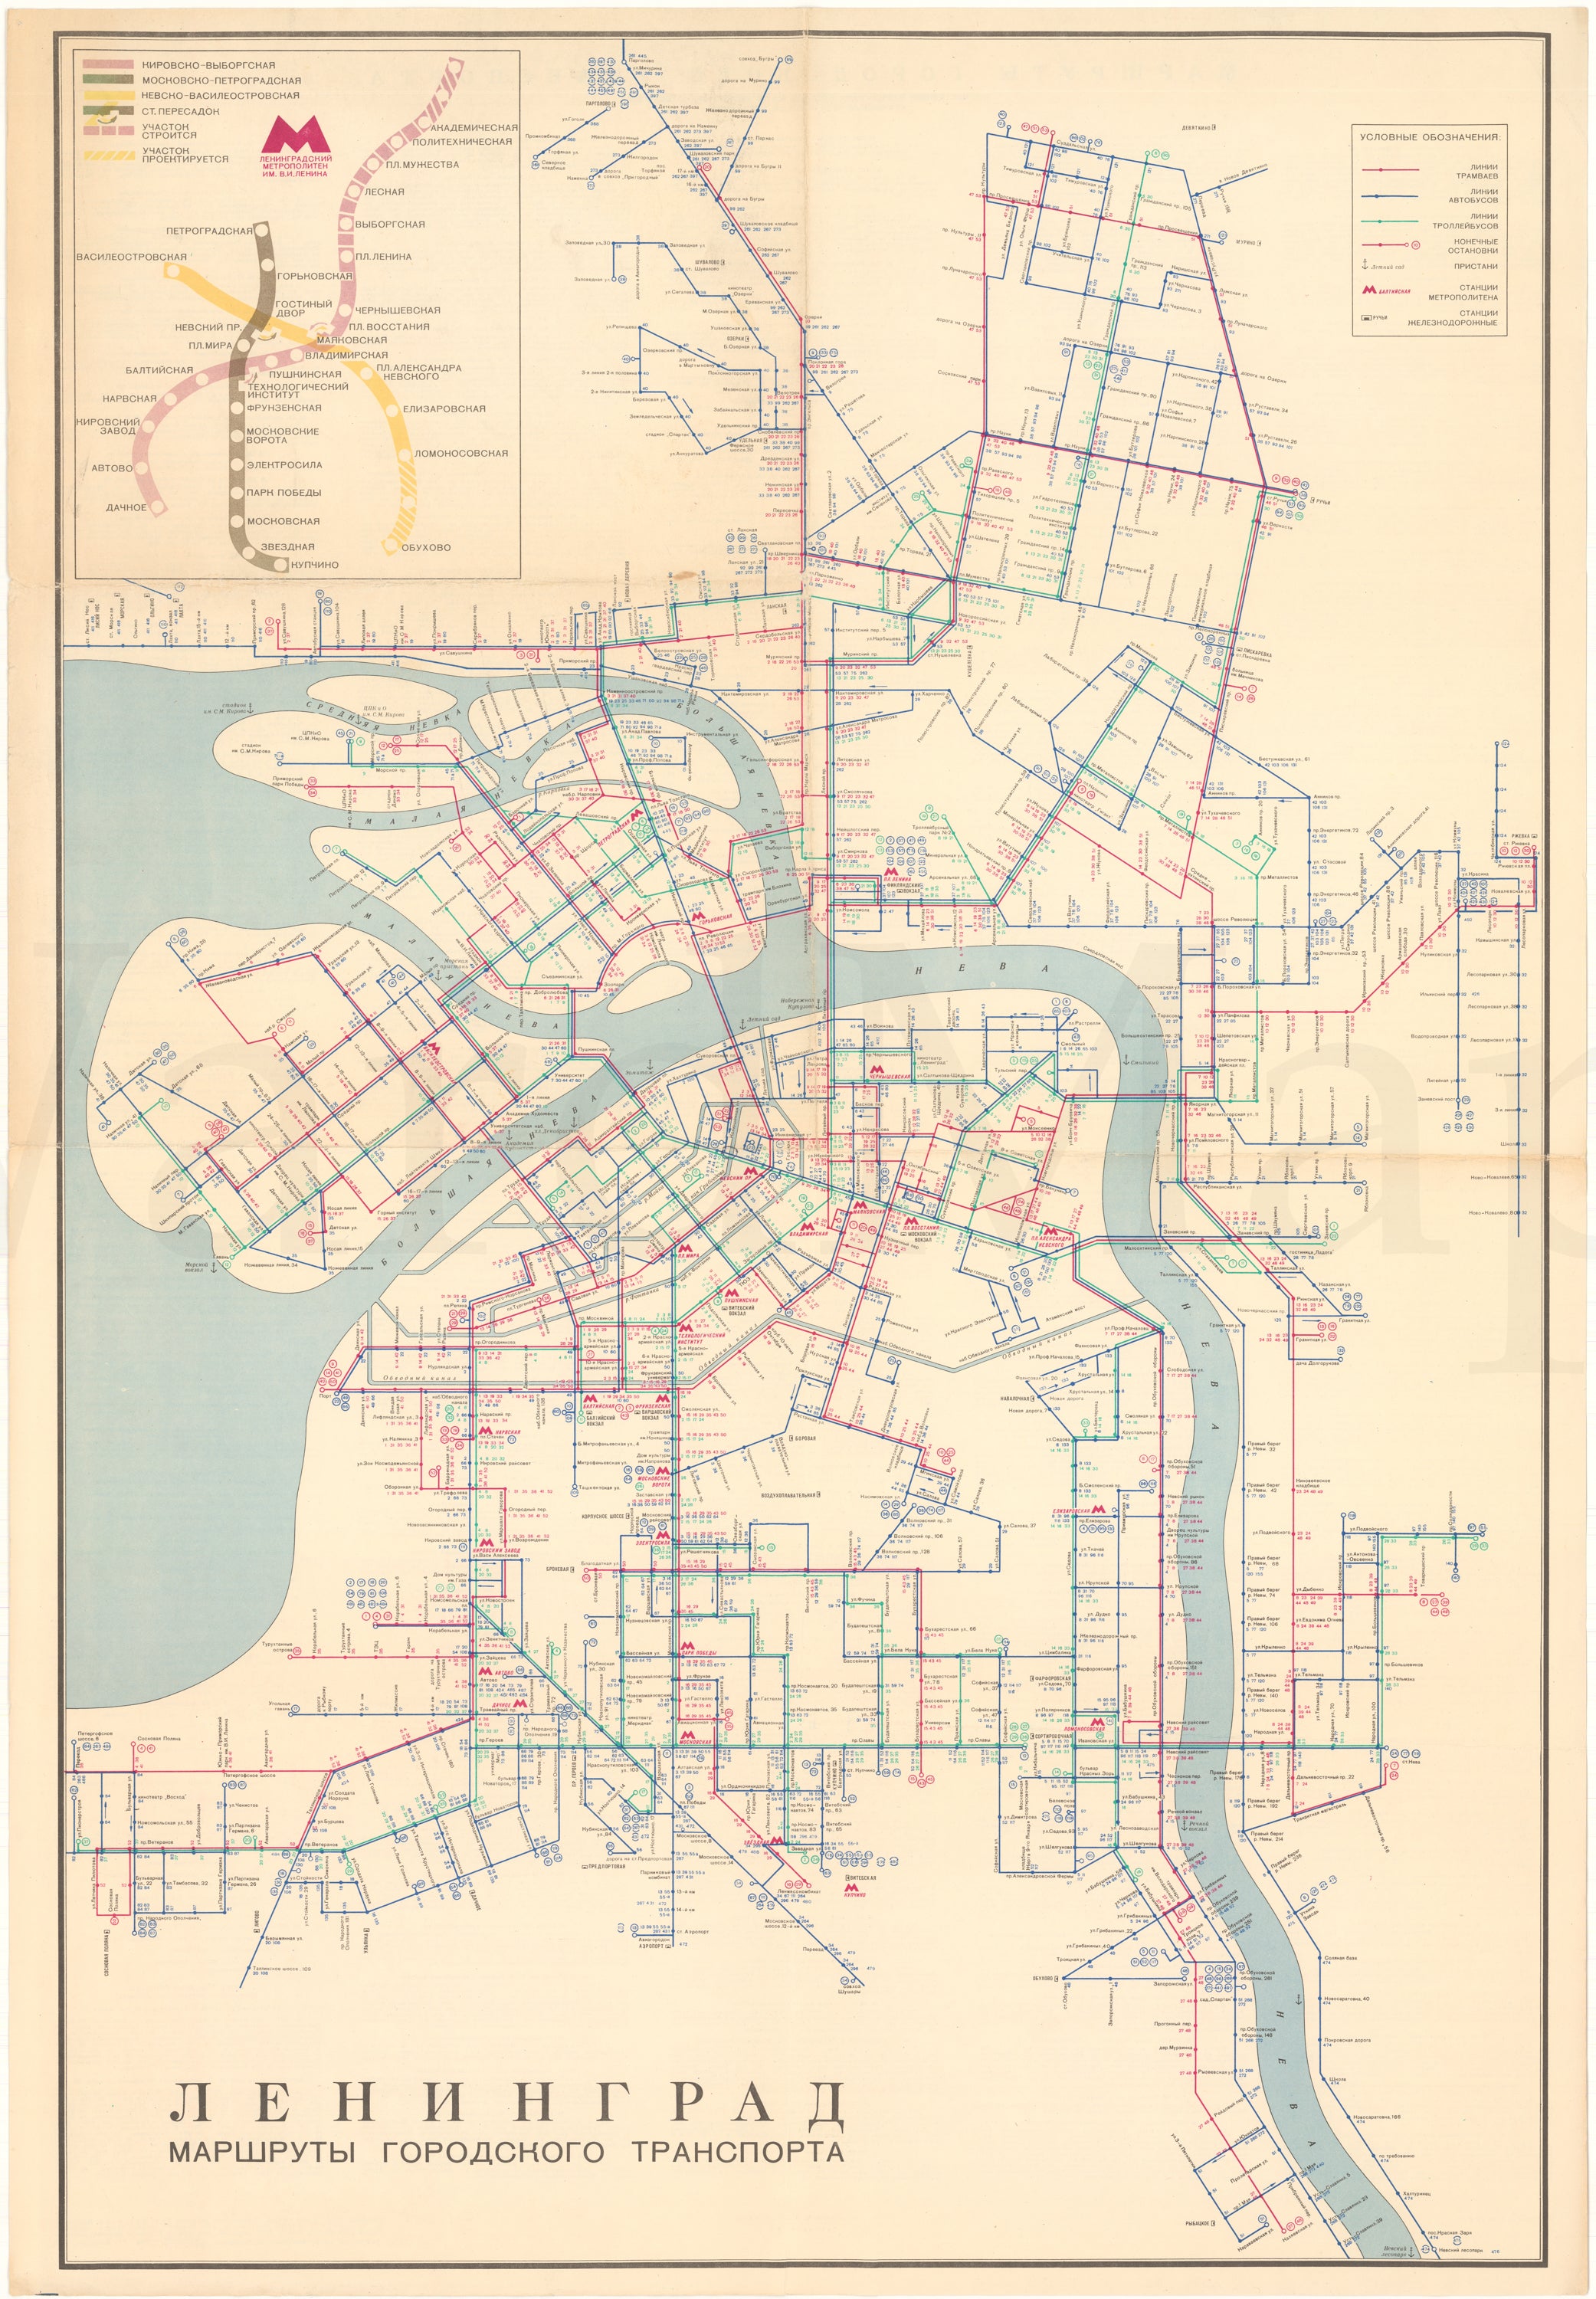 Saint Petersburg, Russia 1973: Transit and Metro Maps